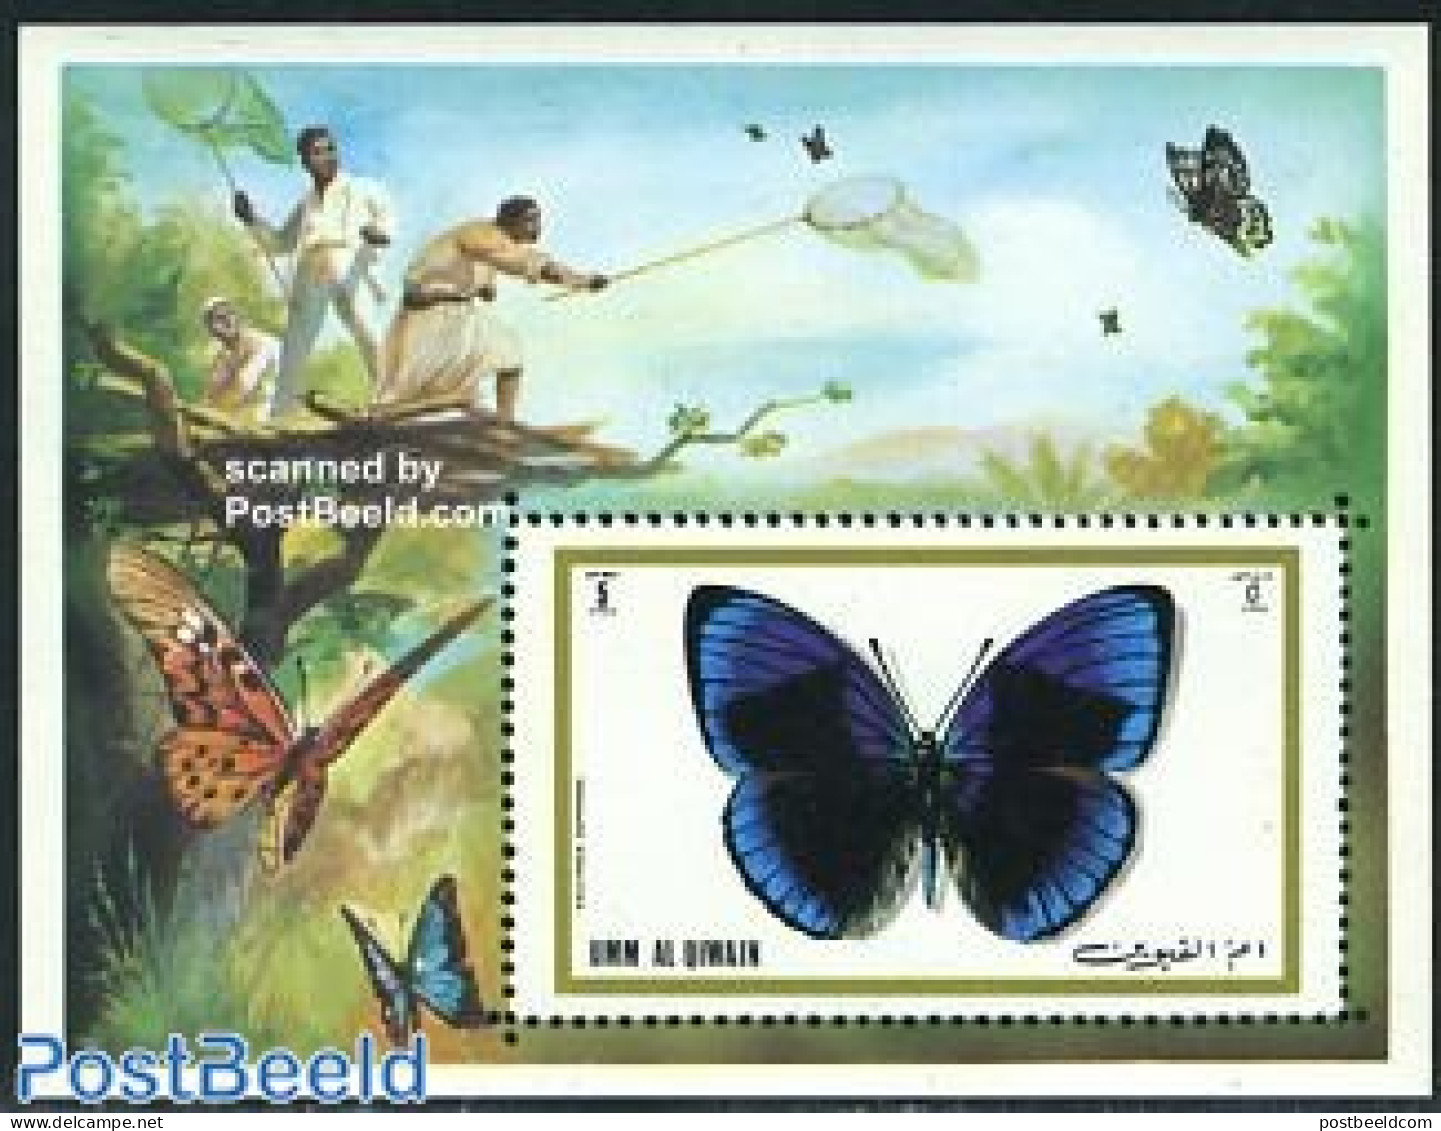 Umm Al-Quwain 1972 Butterflies S/s, Mint NH, Nature - Butterflies - Umm Al-Qaiwain